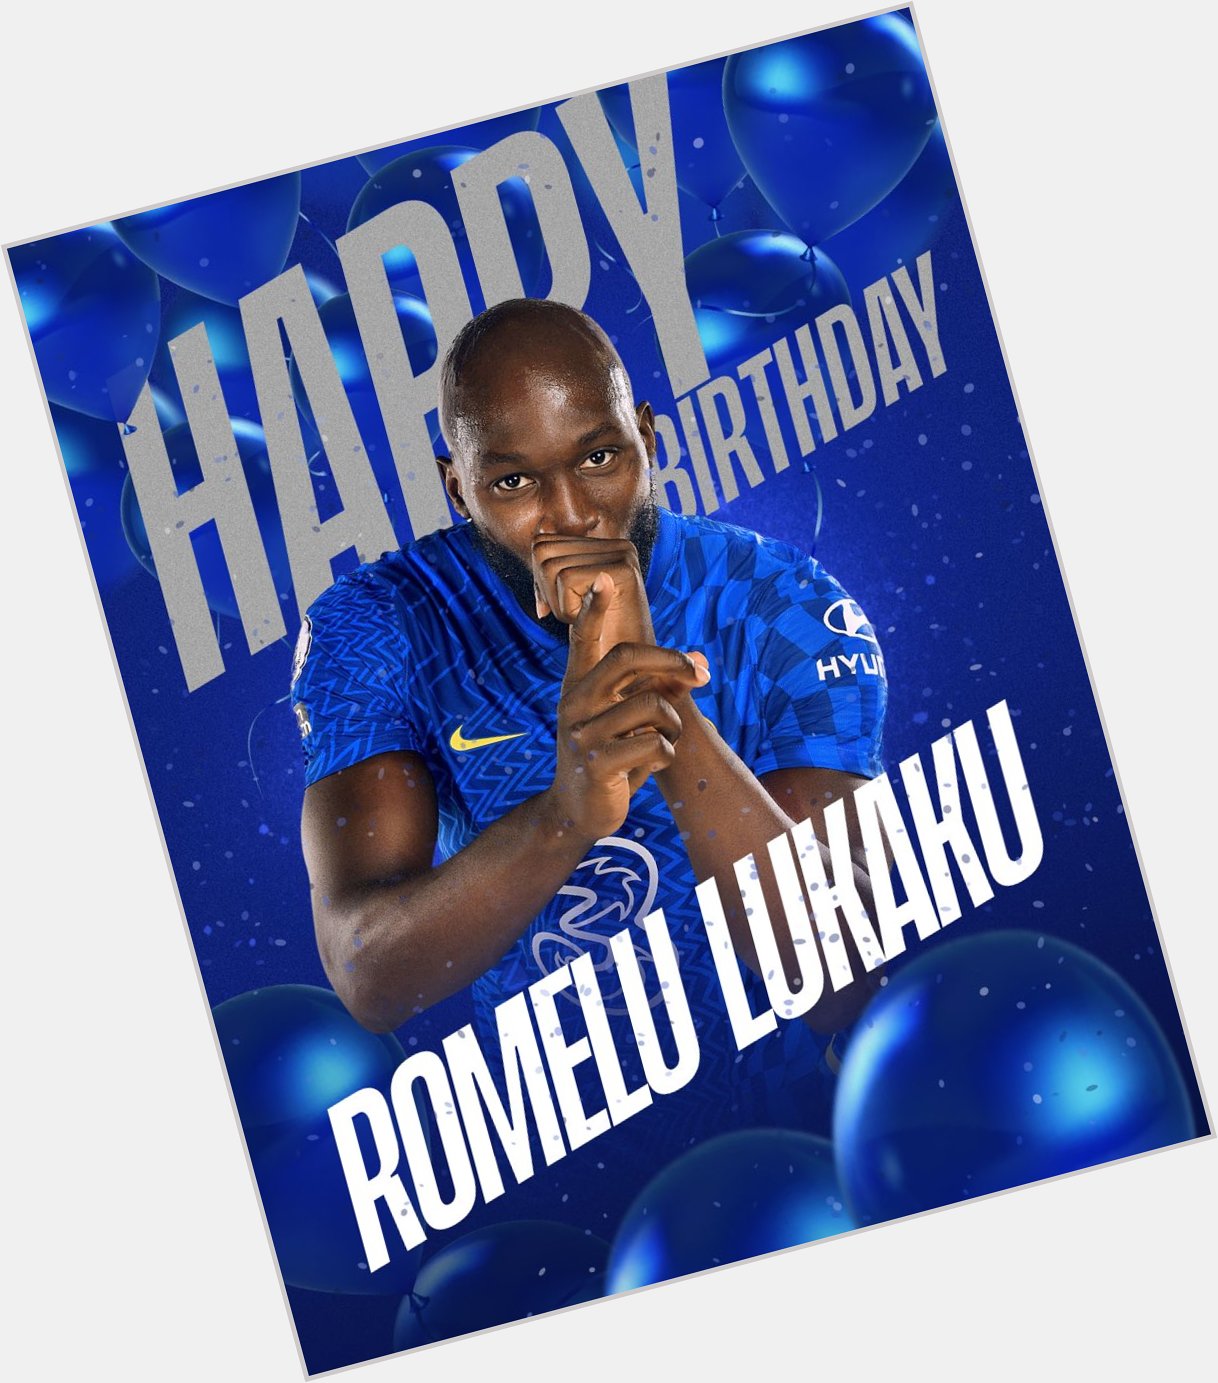 Happy birthday to this superb striker lukaku 